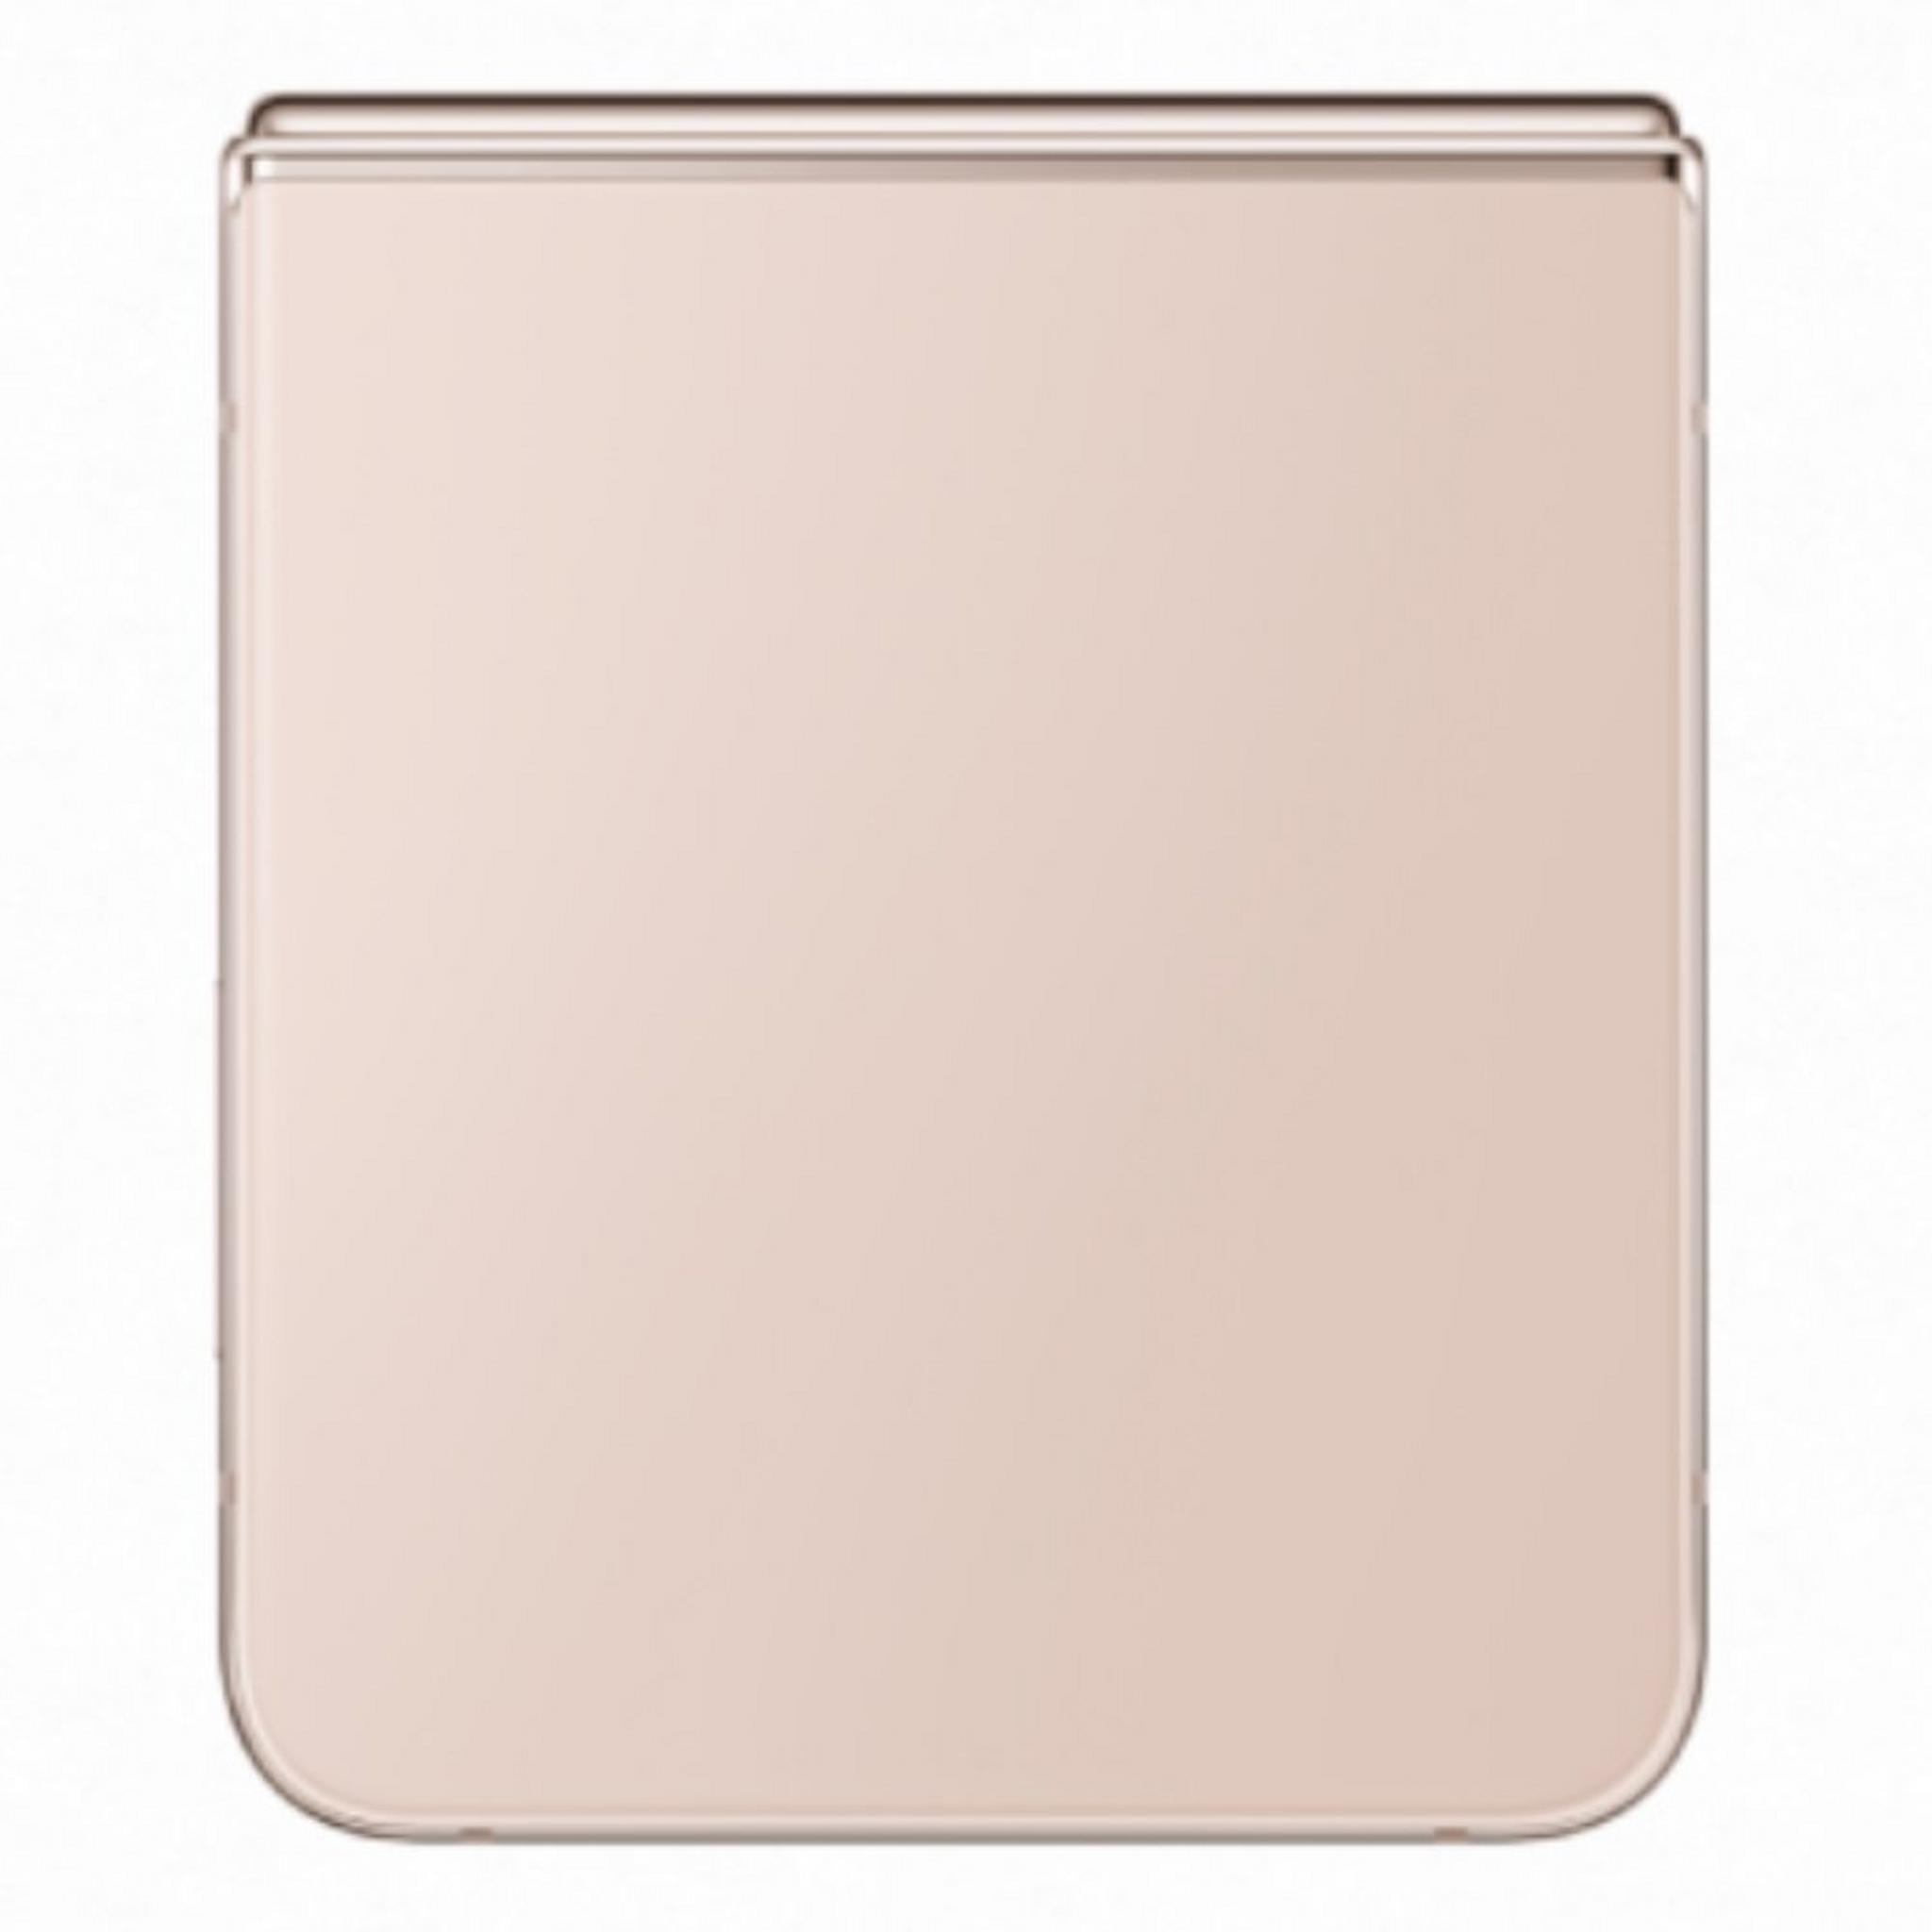 Samsung Galaxy Z Flip 4 5G 128GB Phone - Pink Gold